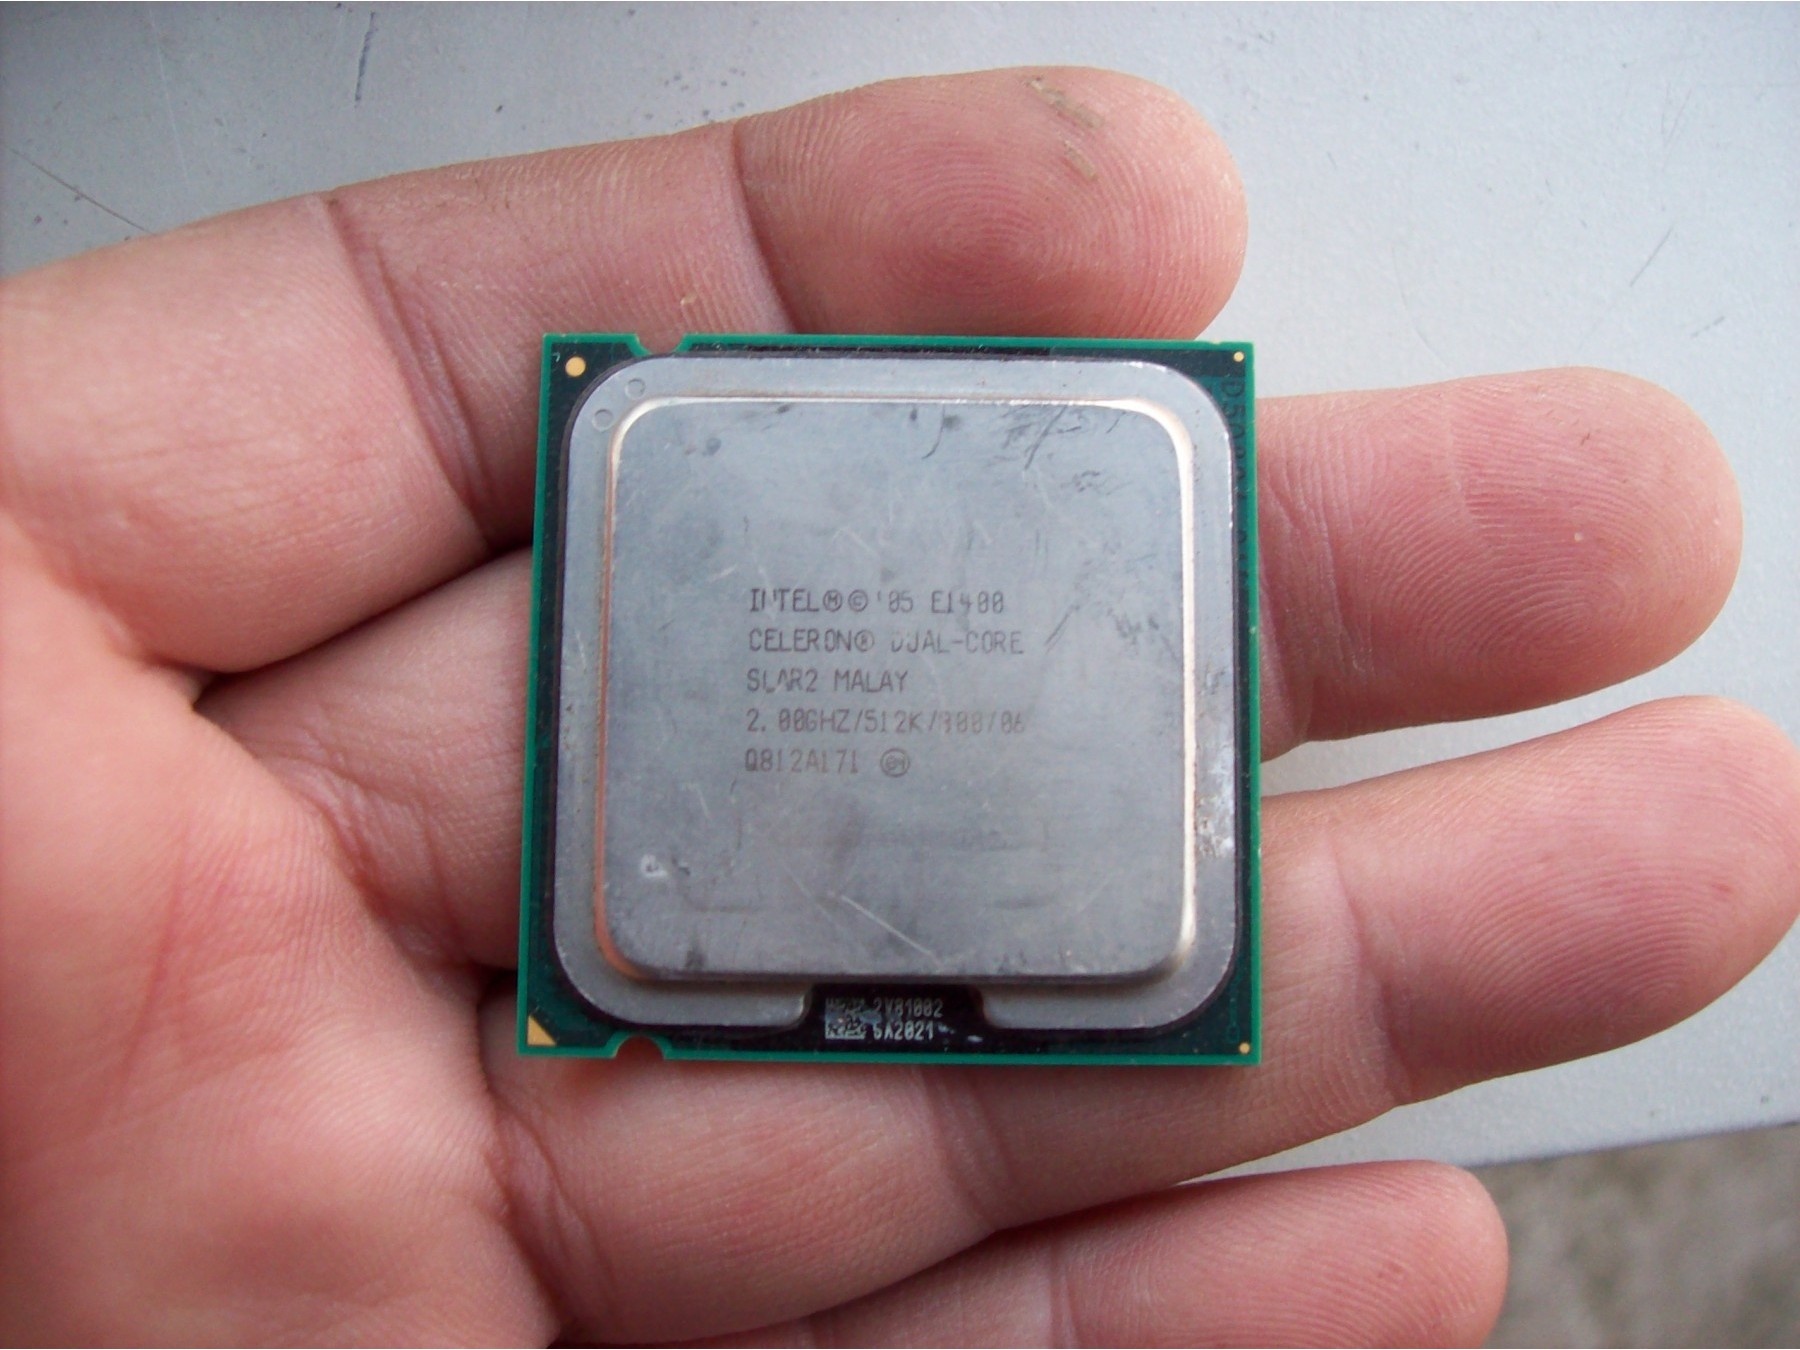 E 1400. Процессор Intel e1400 Celeron Dual-Core slar2 Malay. Celeron Dual Core e1400. Интел 0.2 Celeron Malay. Intel Celeron Dual Core e1400.